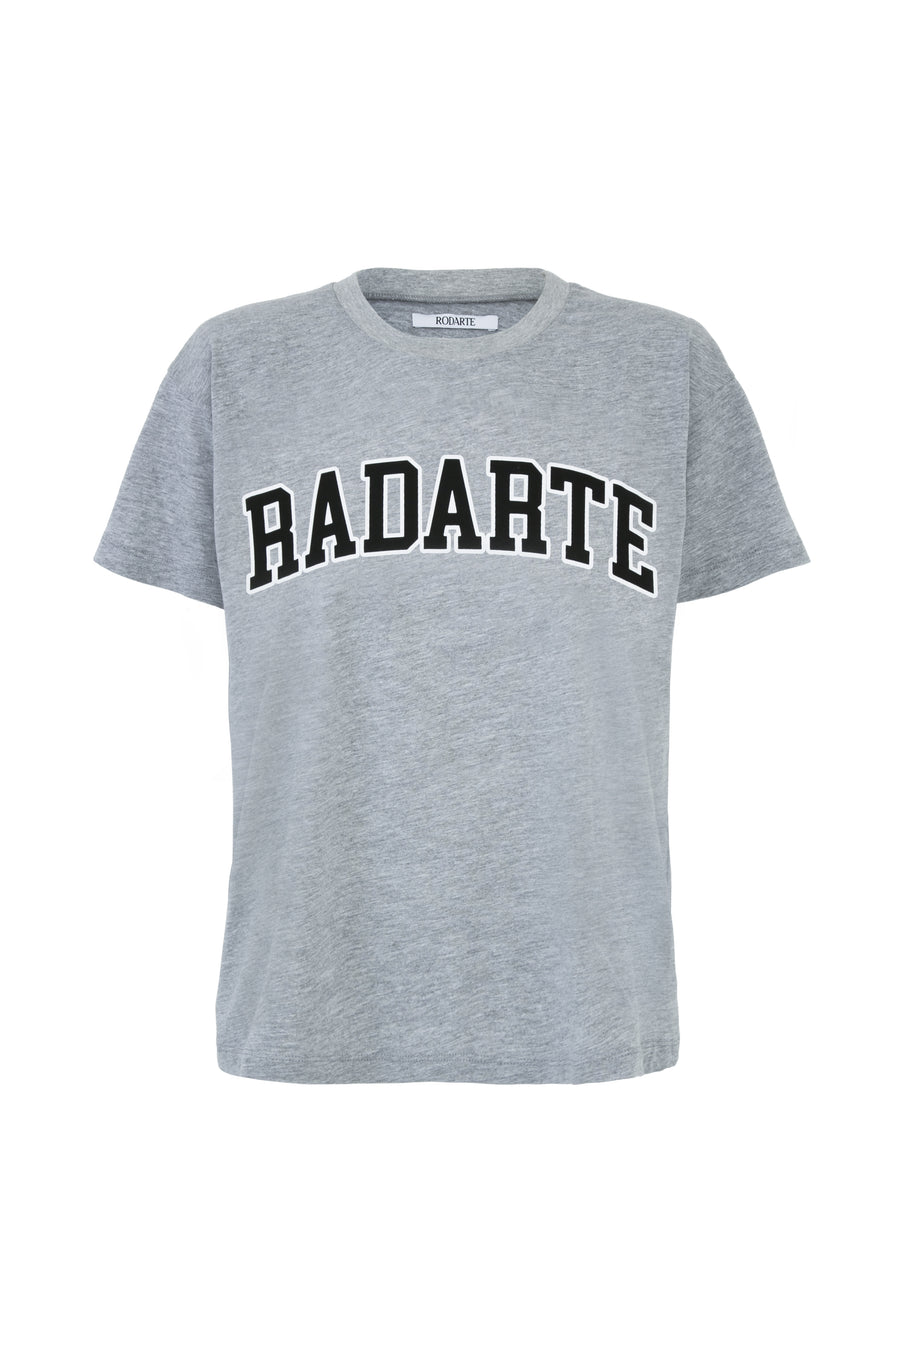 Radarte Collegiate Logo Classic T-Shirt